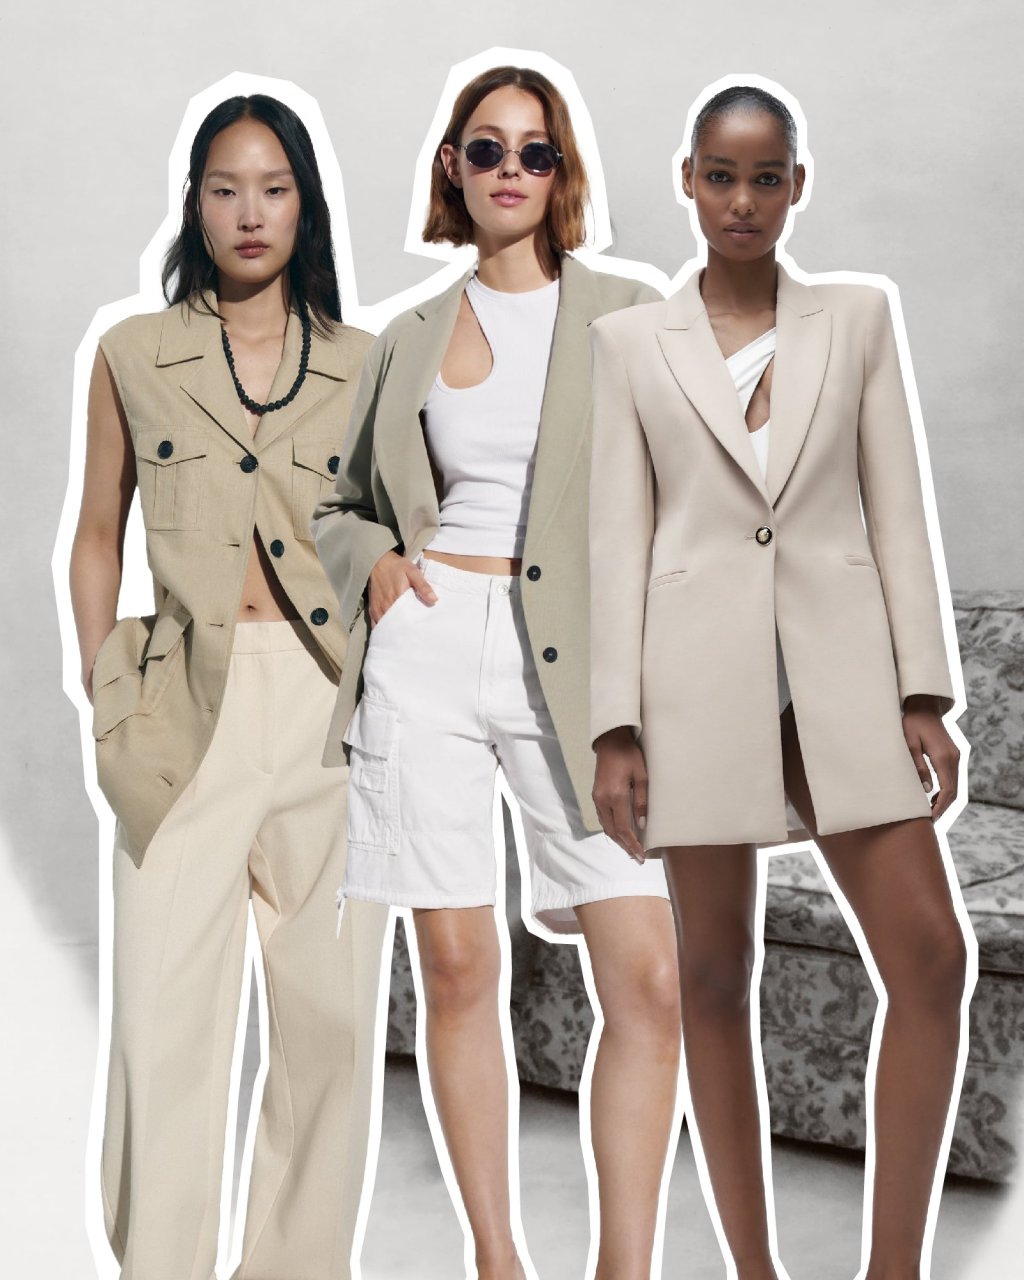 Zara Secret Online Shopping Trick - Zara Tailor Size Feature Online